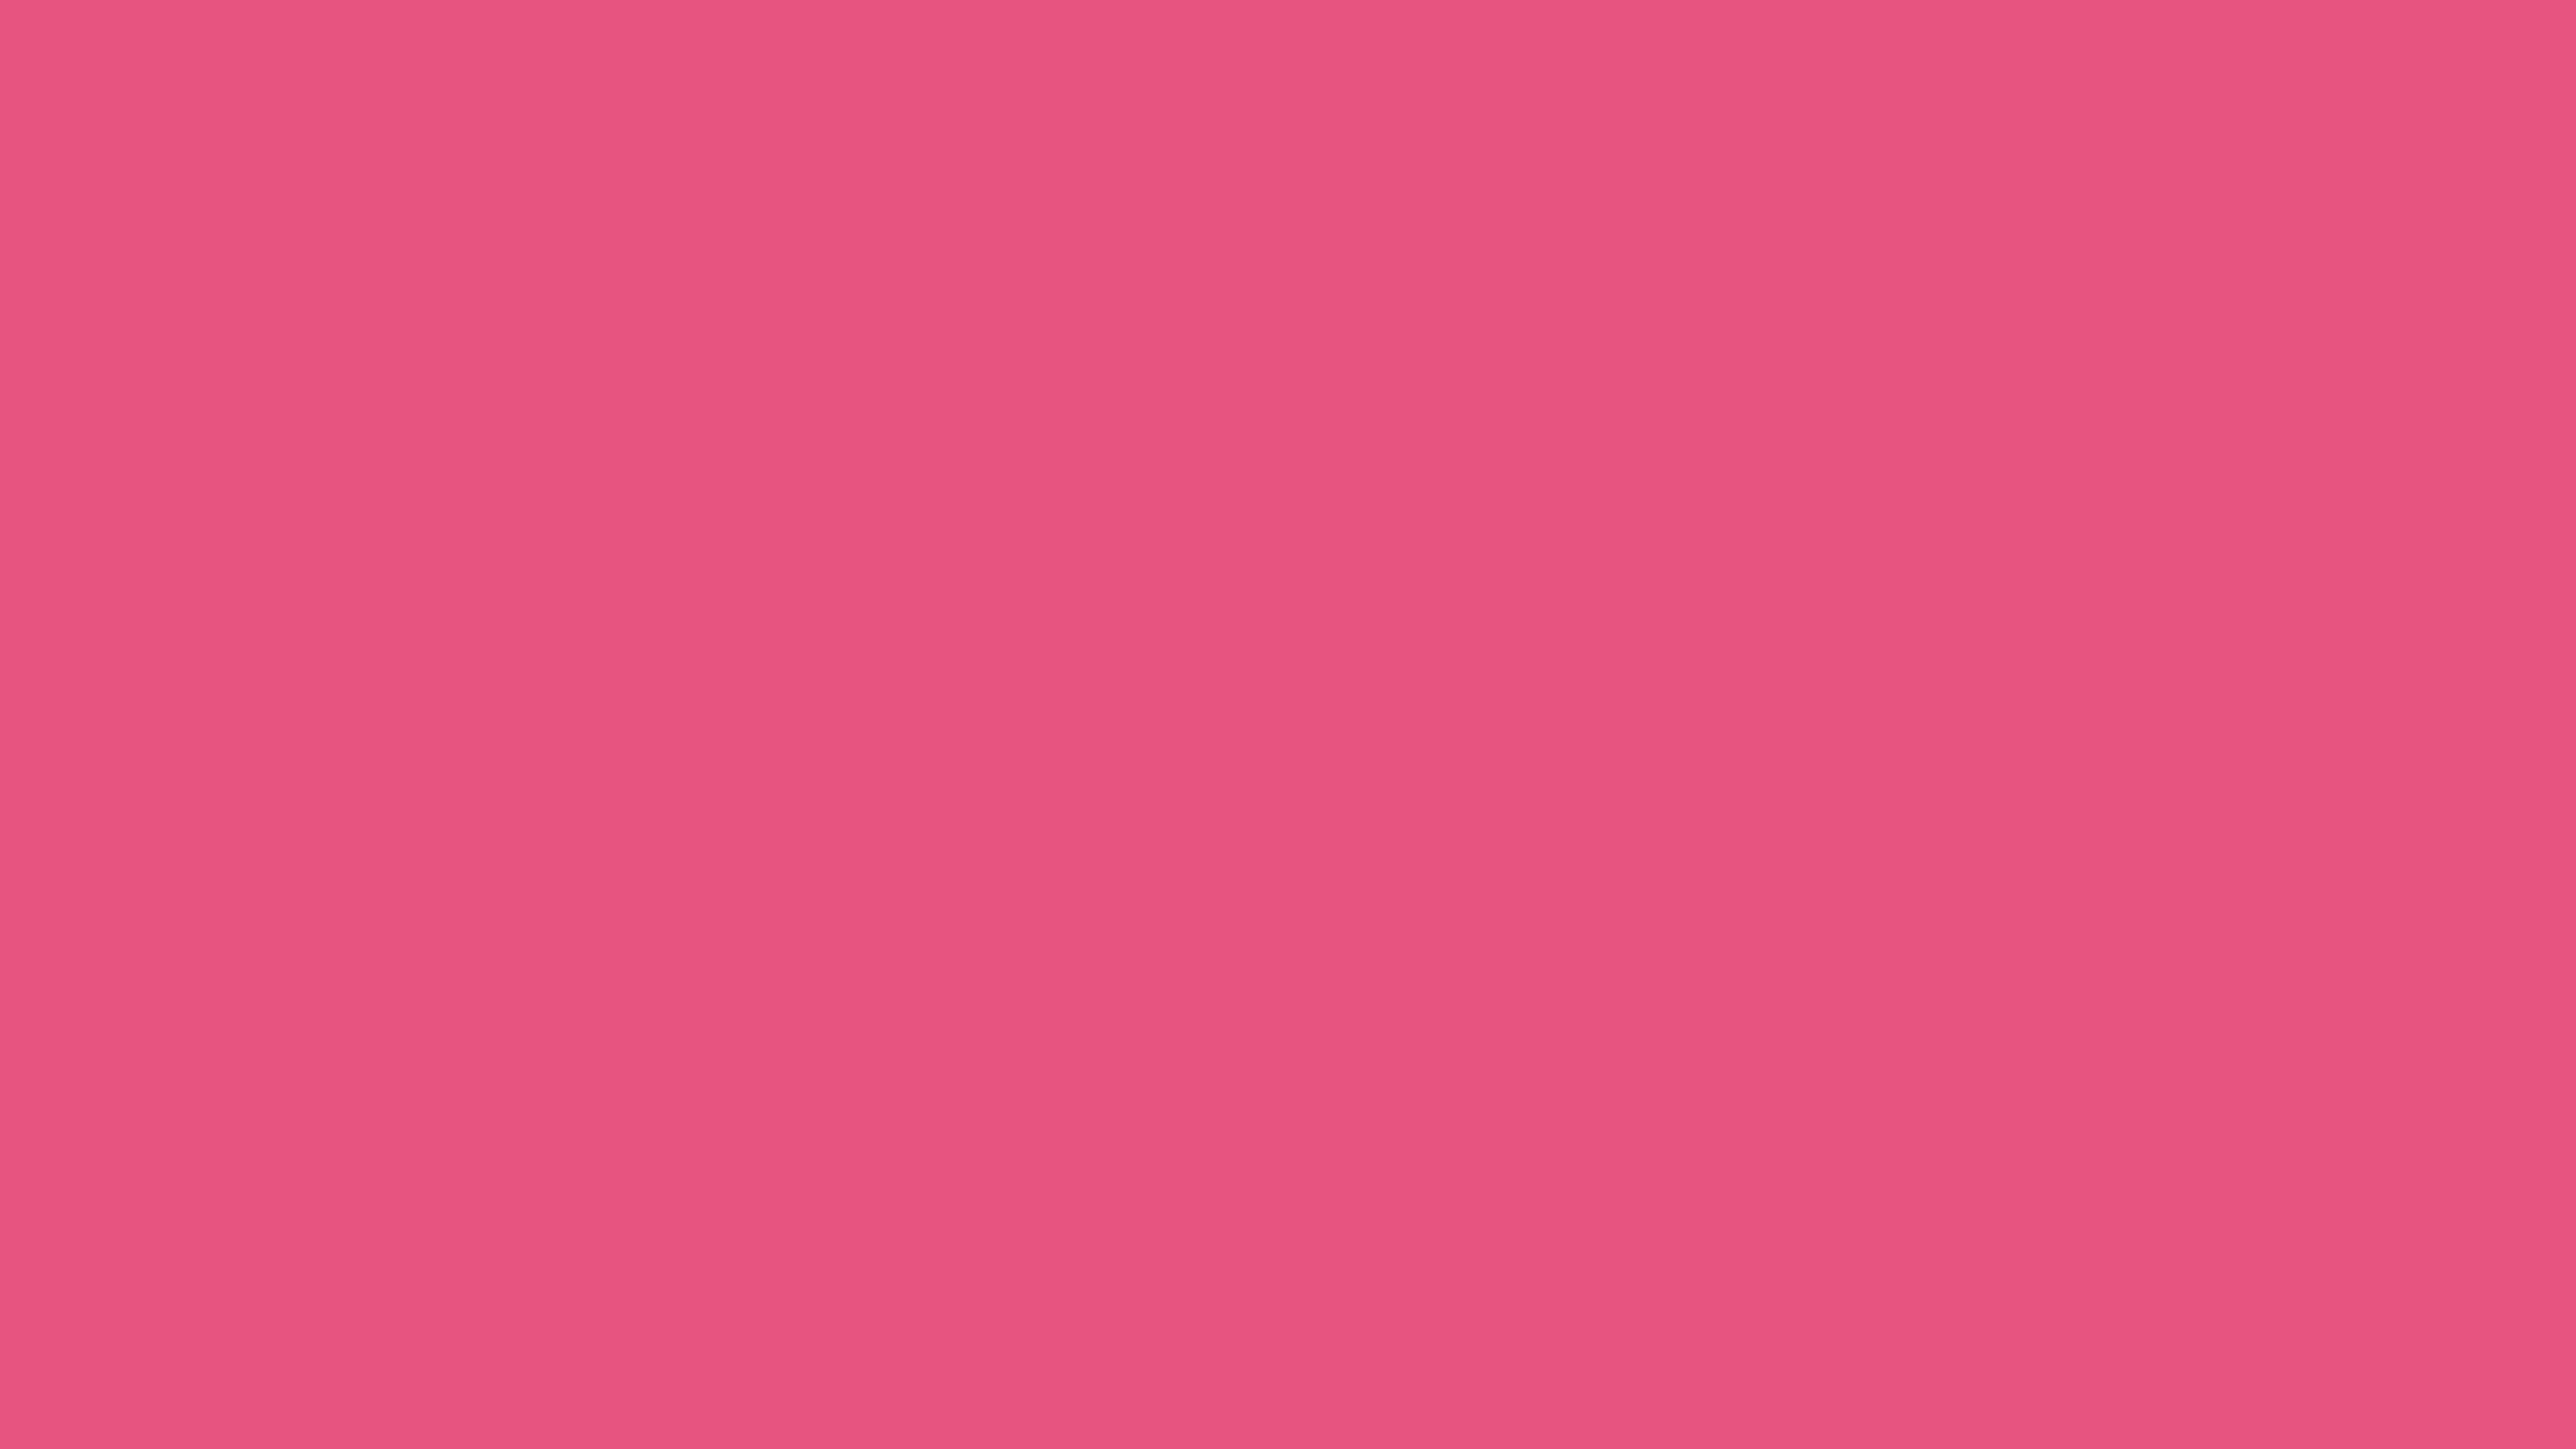 7680x4320 Dark Pink Solid Color Background